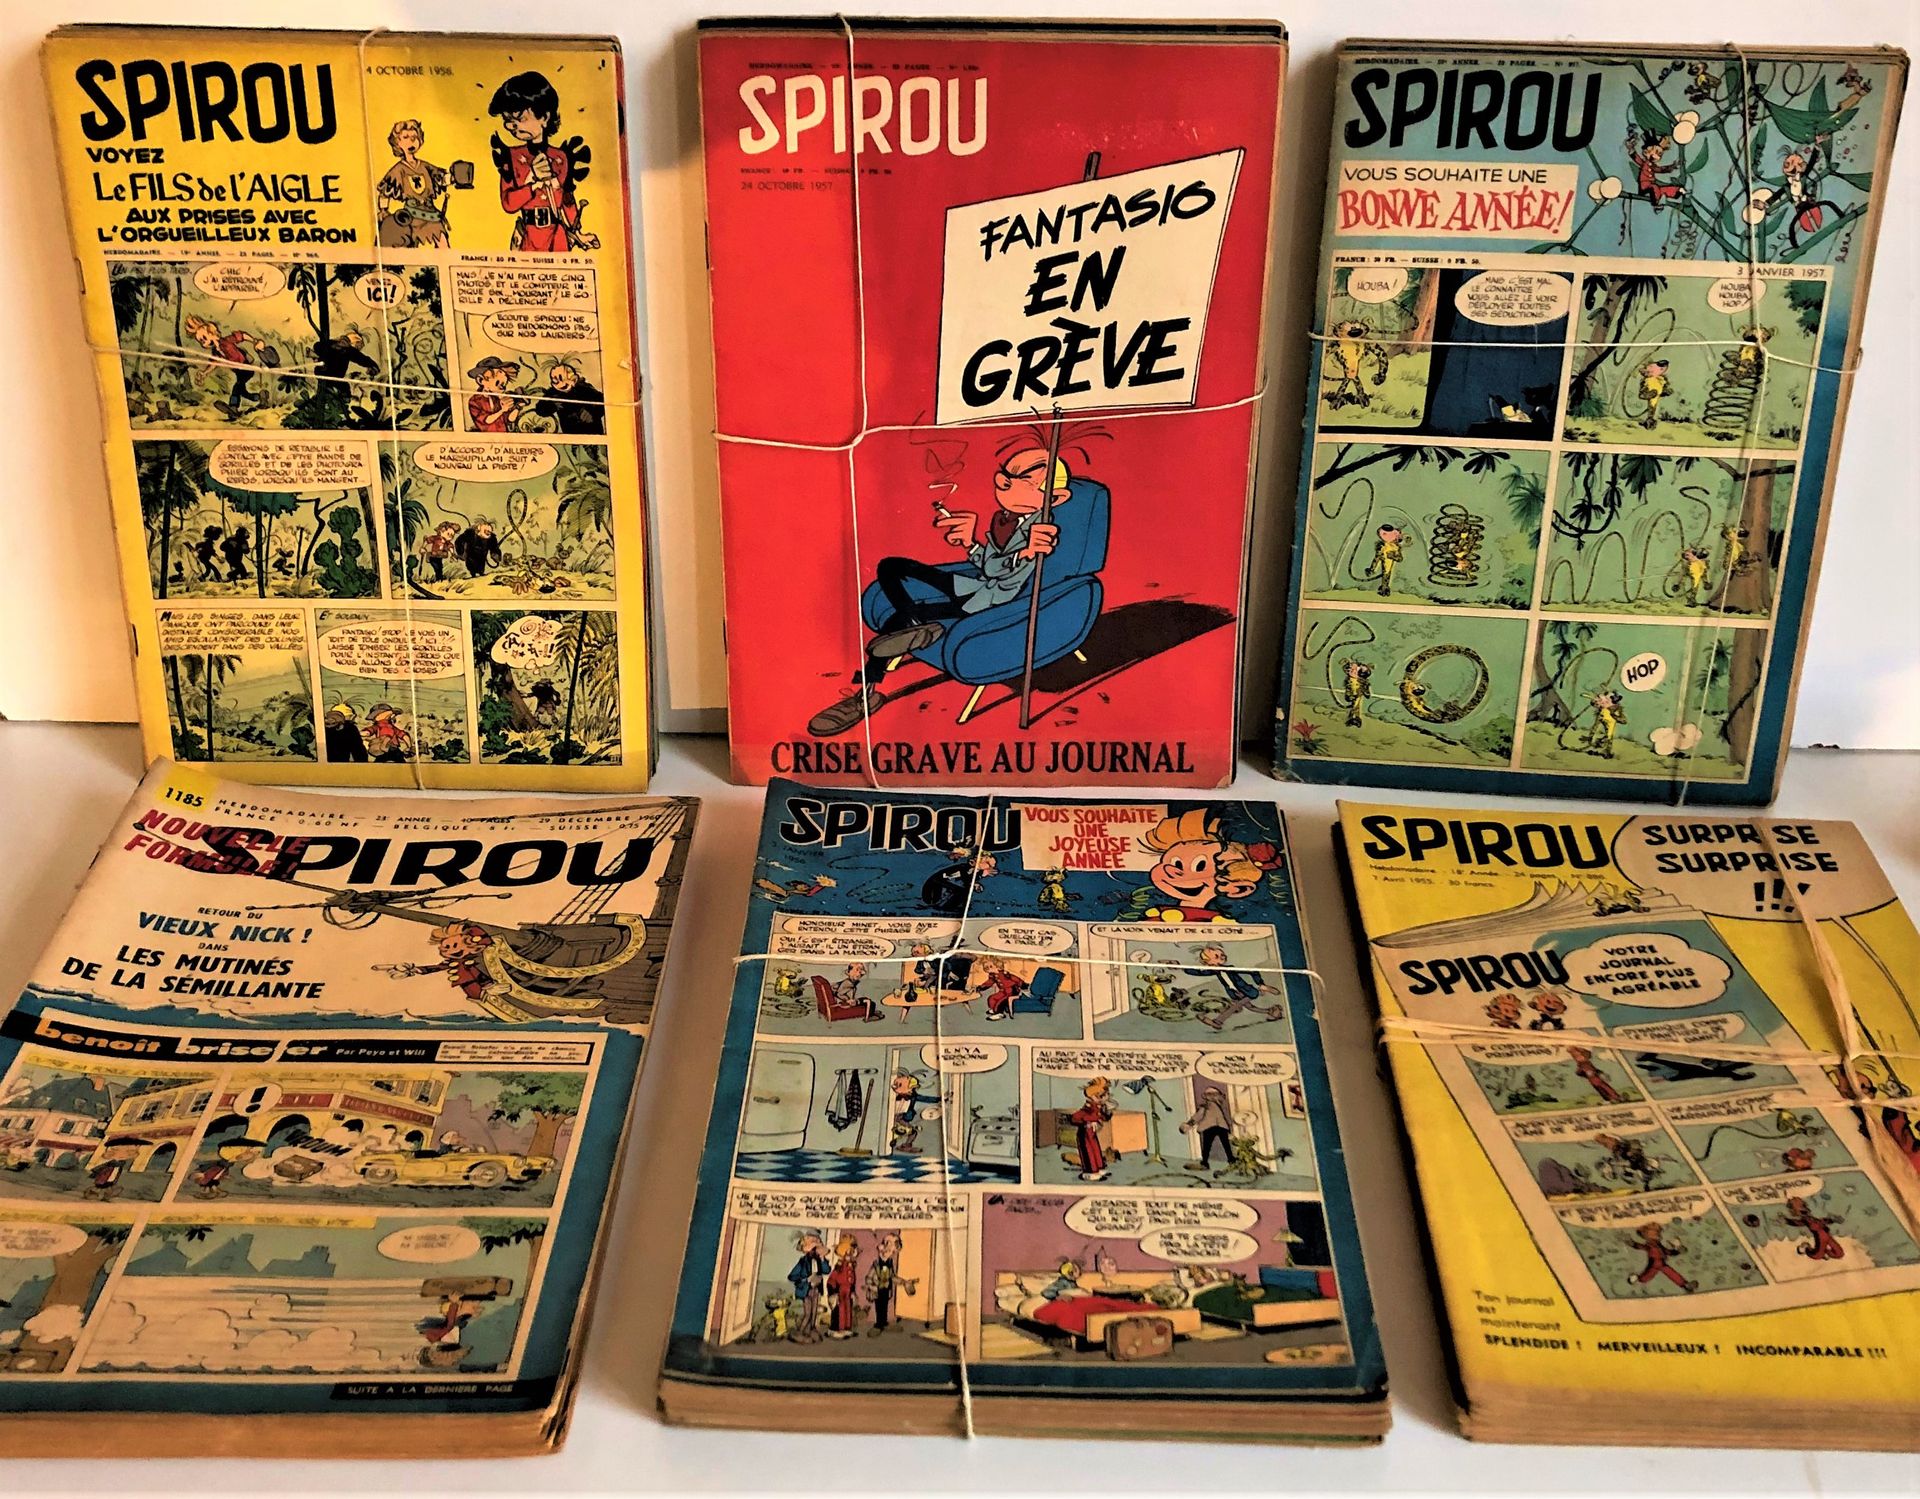 FRANQUIN SPIROU REVUE套装 - 从1953年到1962年约430期 - 状态良好